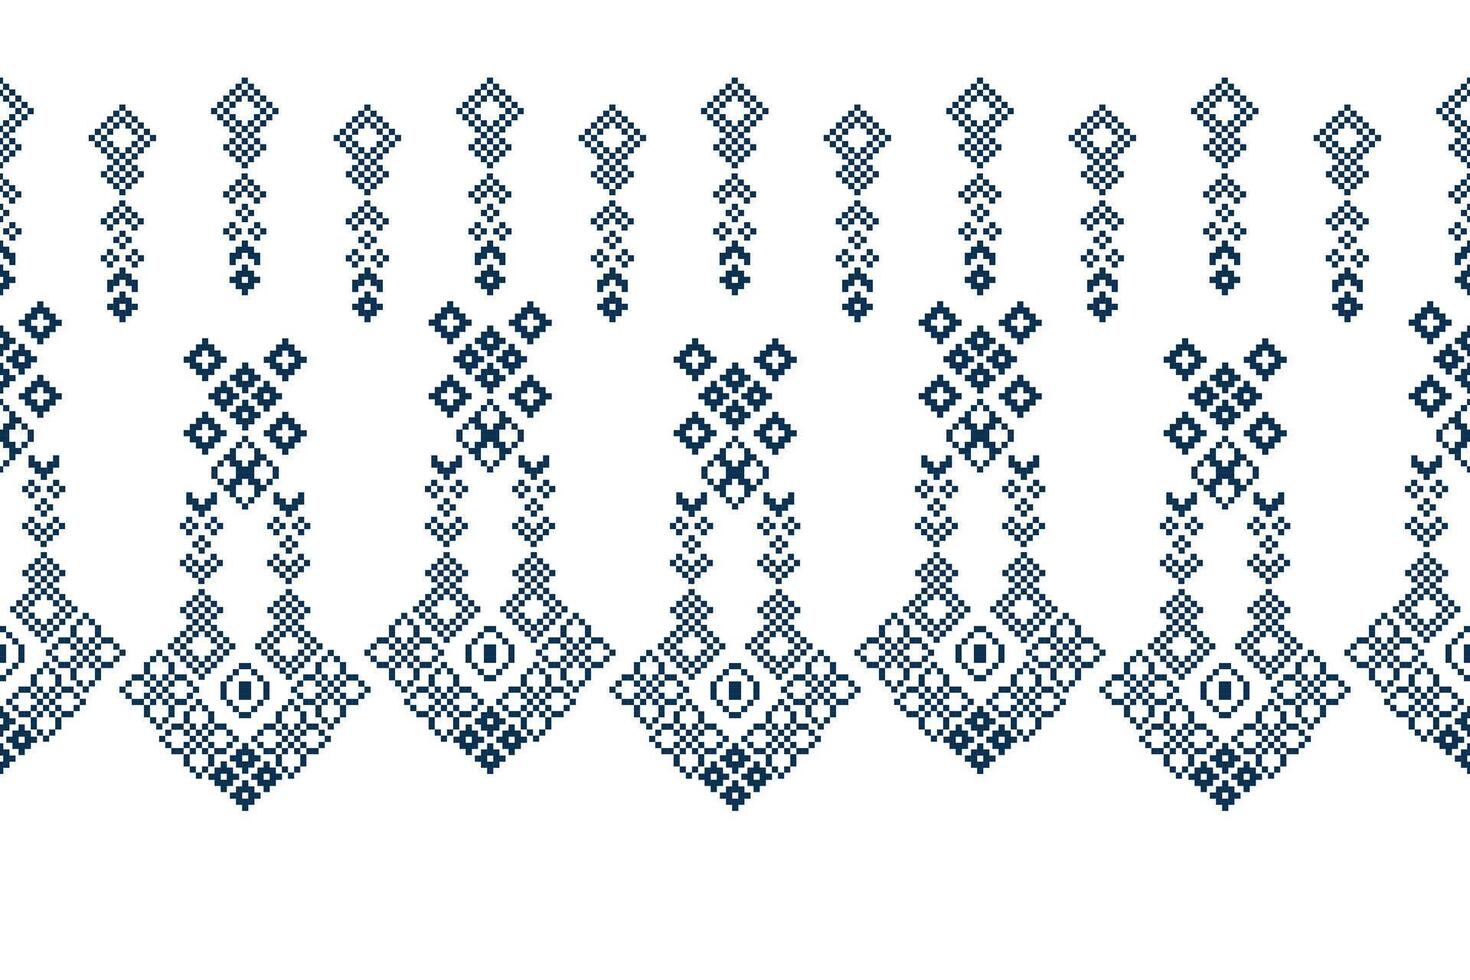 traditionell etnisk motiv ikat geometrisk tyg mönster korsa stitch.ikat broderi etnisk orientalisk pixel vit background.abstract, vektor, illustration. textur, halsduk, dekoration, tapeter. vektor